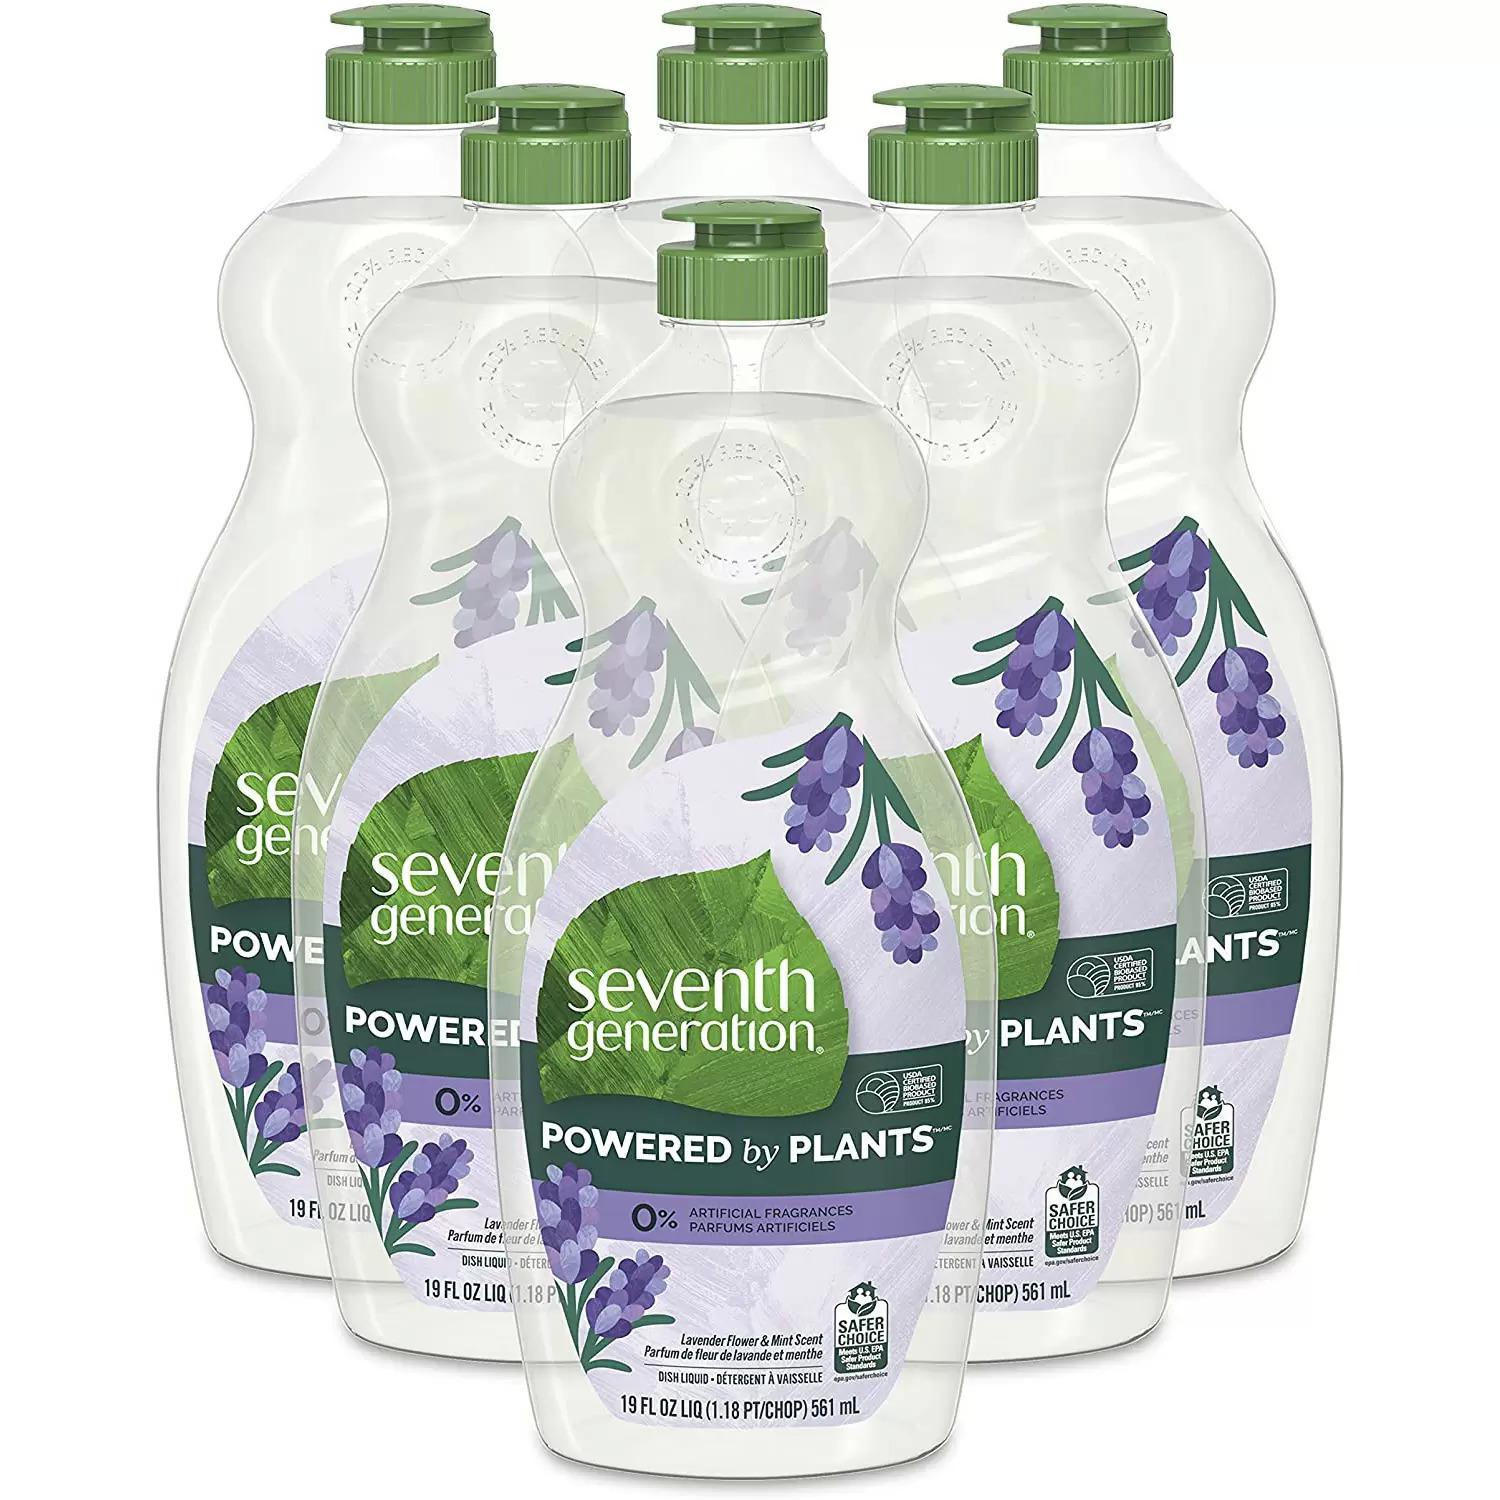 6 Seventh Generation Lavender Dish Liquid Soap for $12.69 Shipped